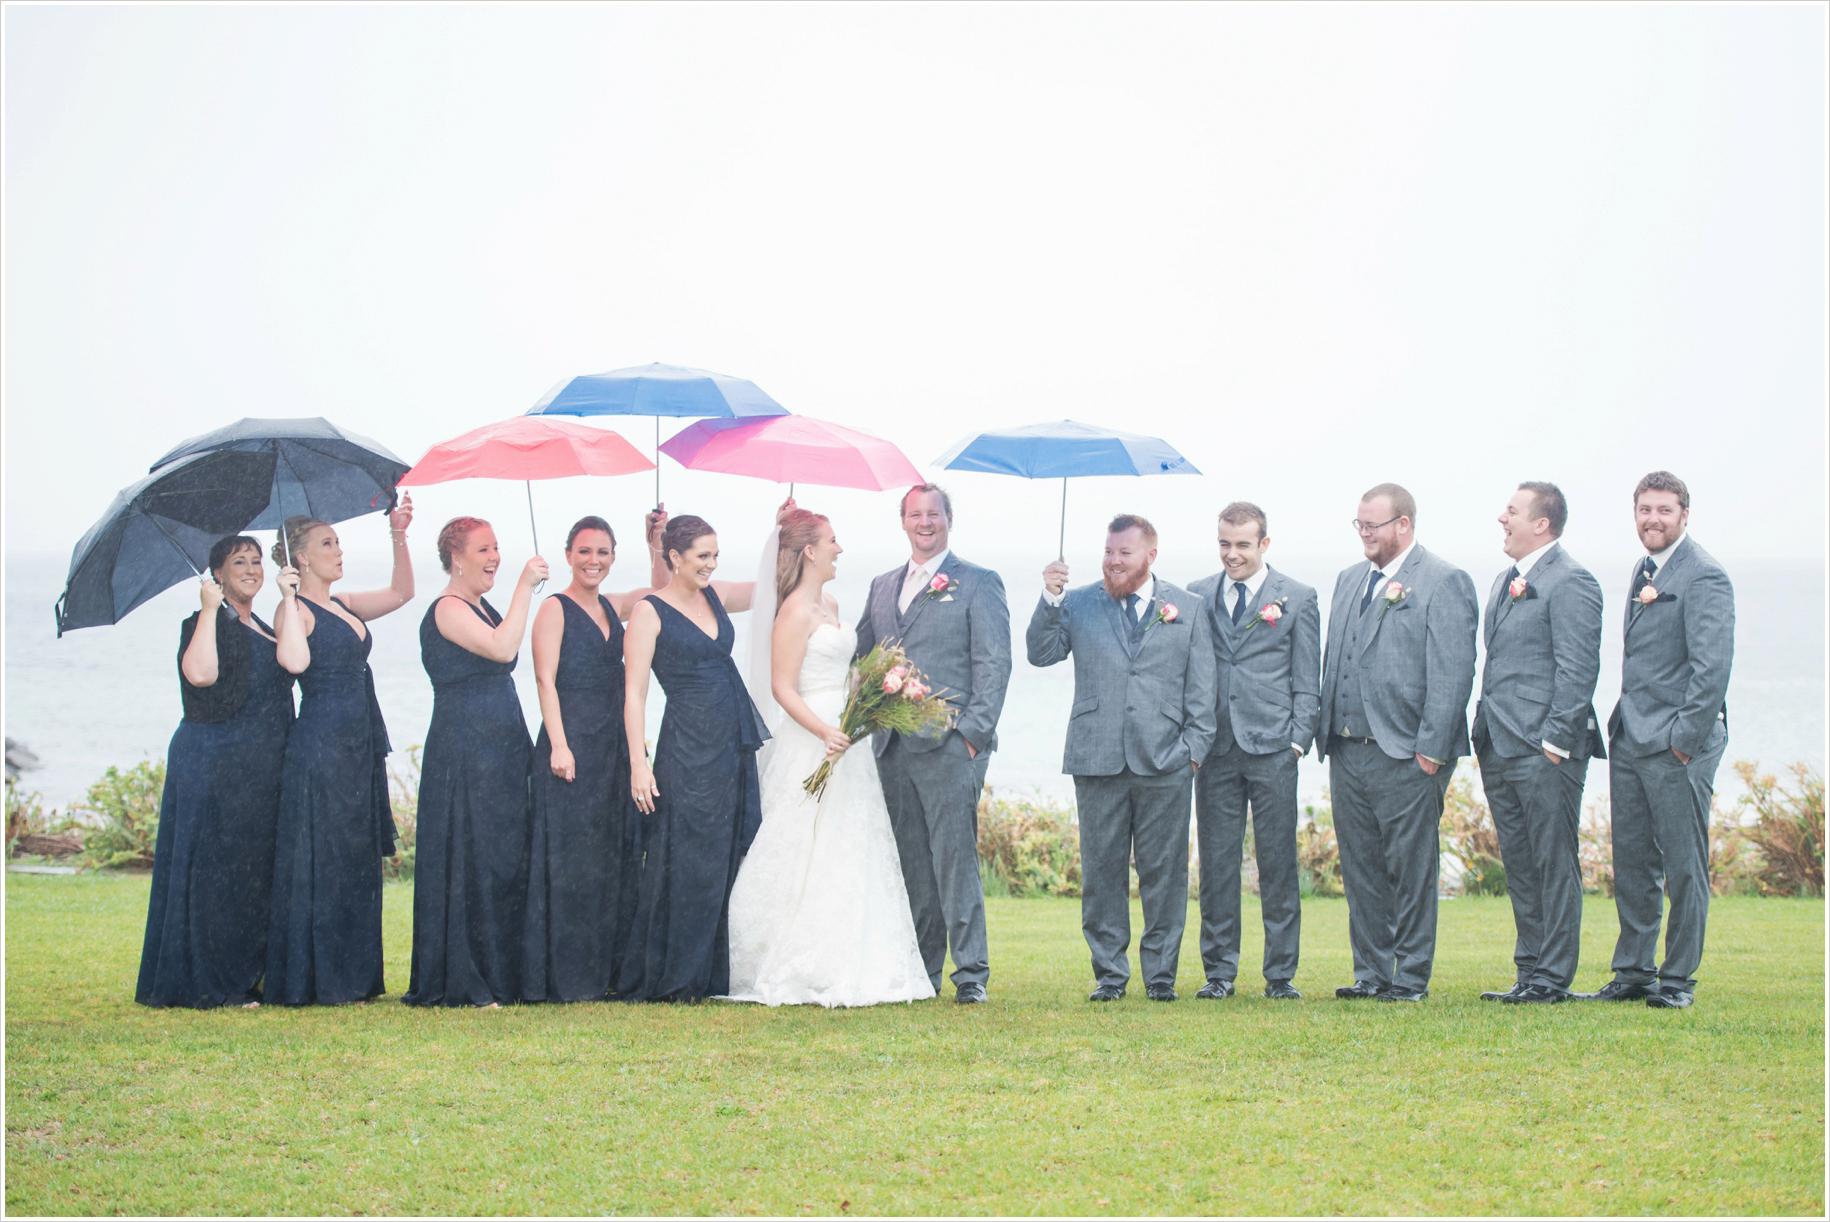 bridal part in the rain with umbrellas